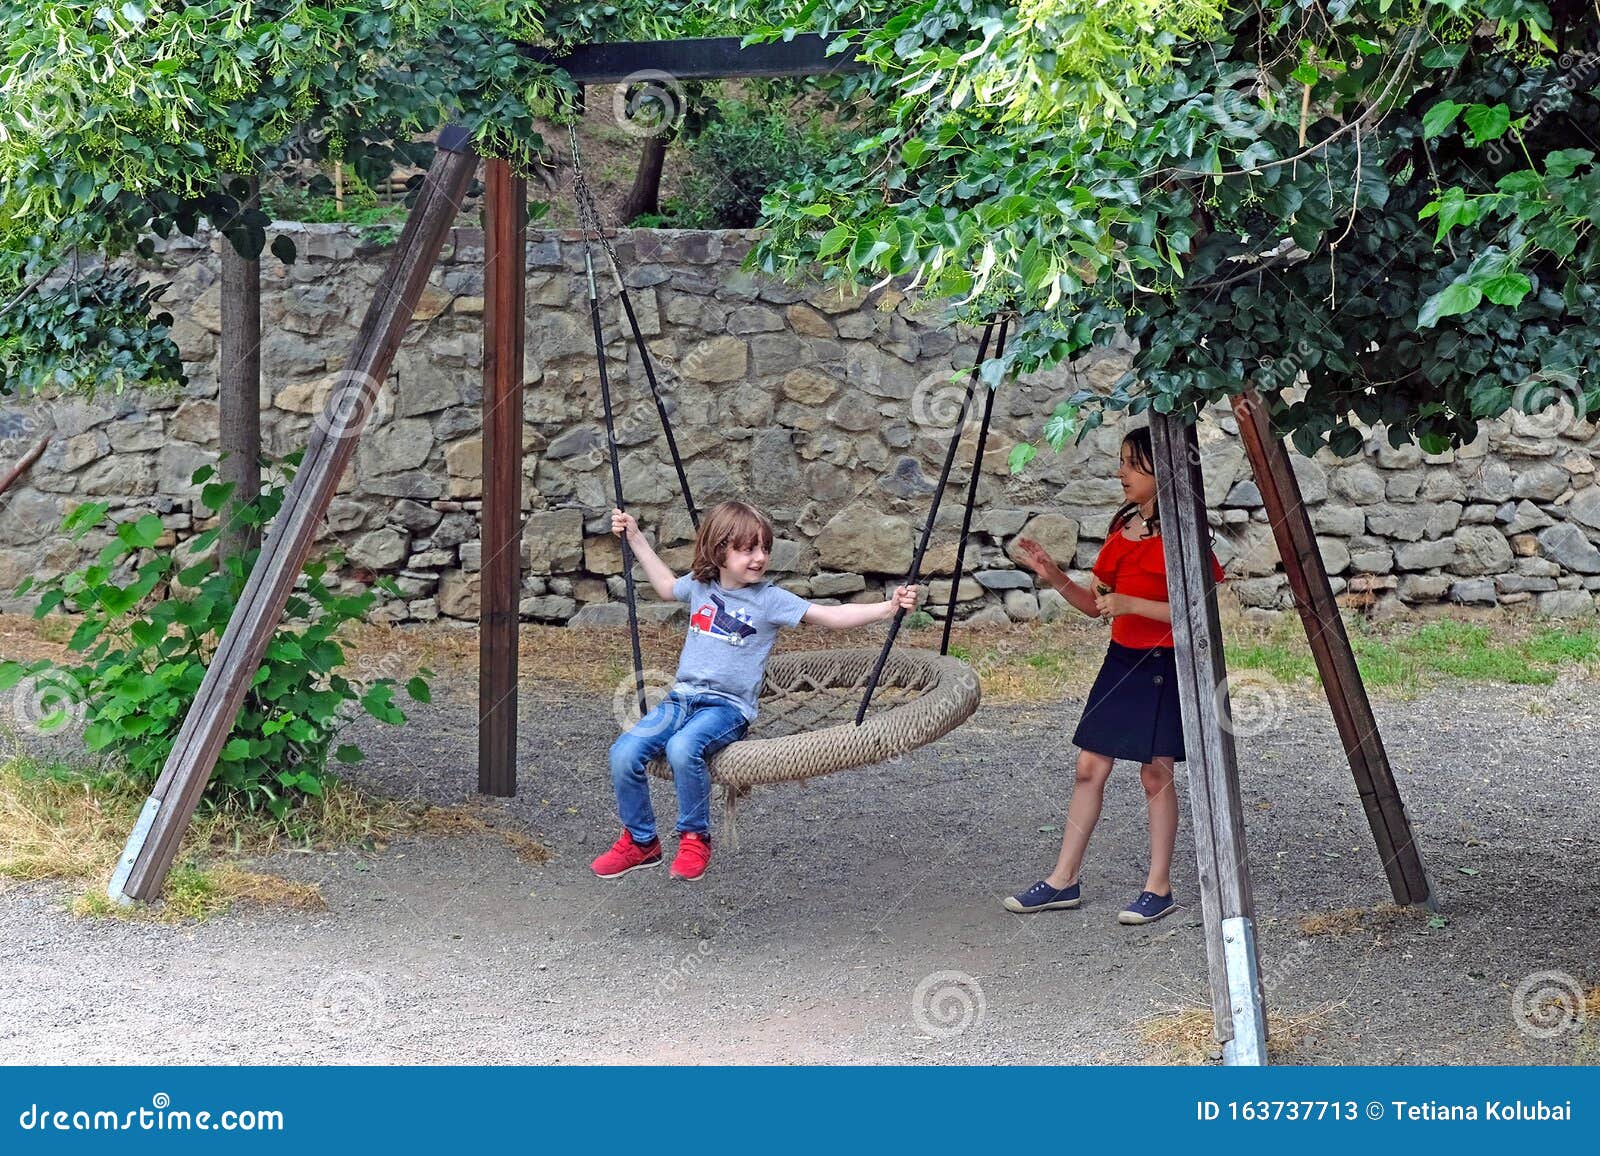 https://thumbs.dreamstime.com/z/children-ride-round-swing-net-park-tbilisi-georgia-june-girl-rolls-little-boy-botanical-garden-163737713.jpg